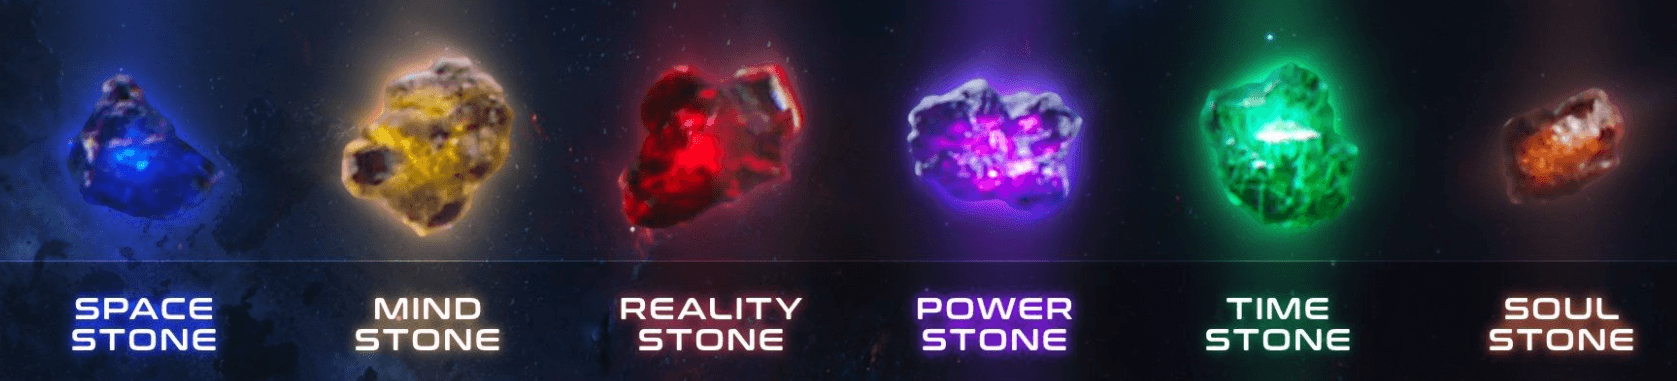 Цвета камни бесконечности ТАНОСА. 6 Камней бесконечности Марвел. Камни бесконечности Марвел цвета. Камни бесконечности (кинематографическая Вселенная Marvel).